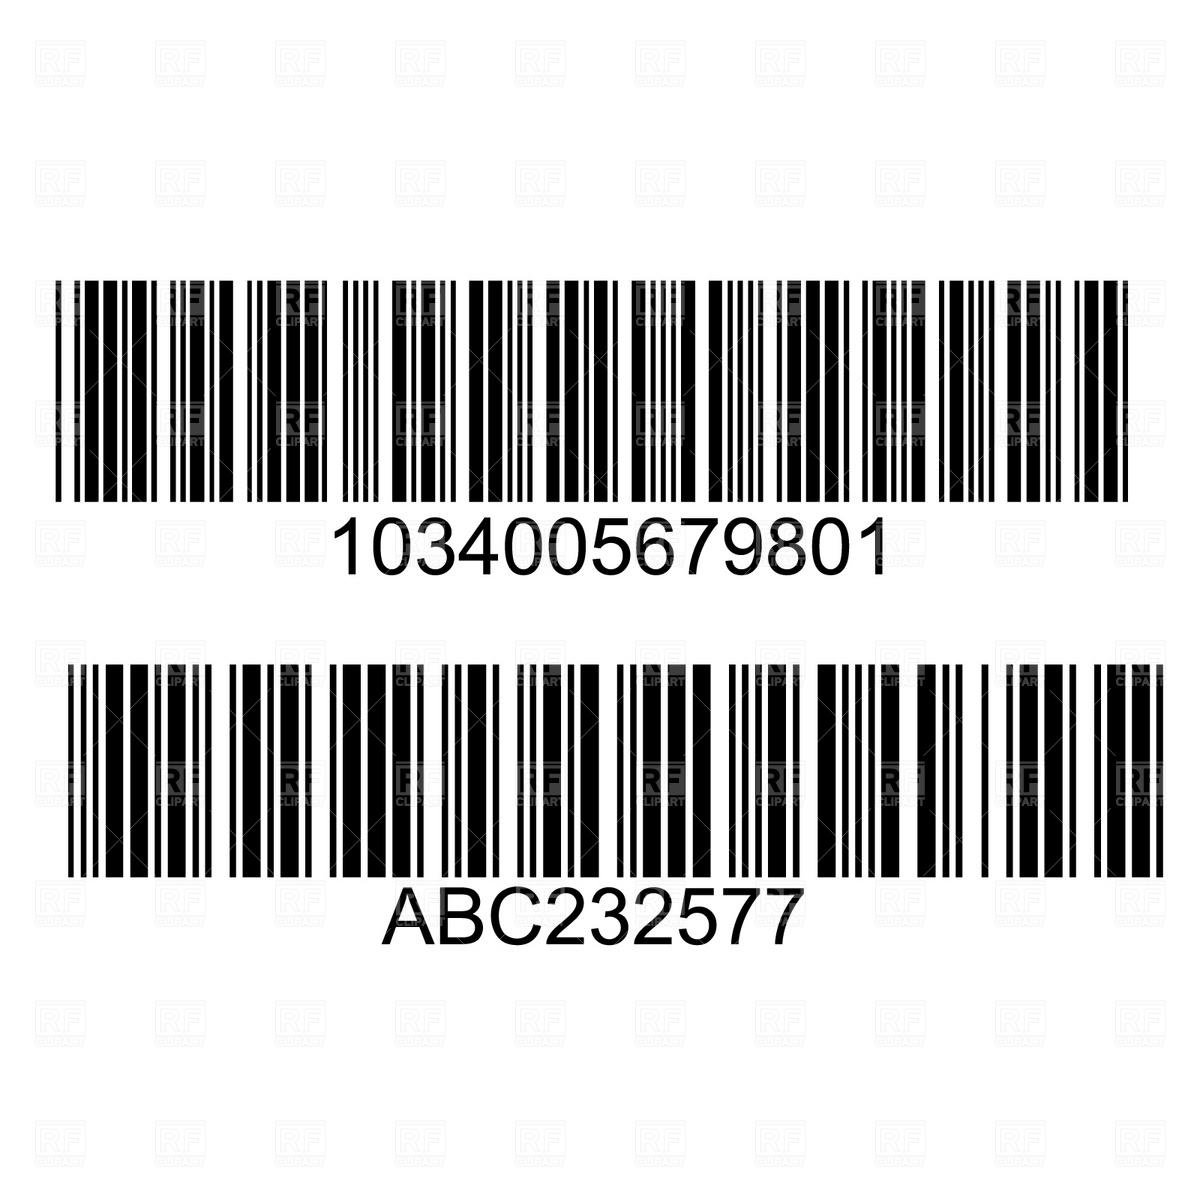 Barcode 1772 Signs Symbols Maps Download Royalty Free Vector Clip